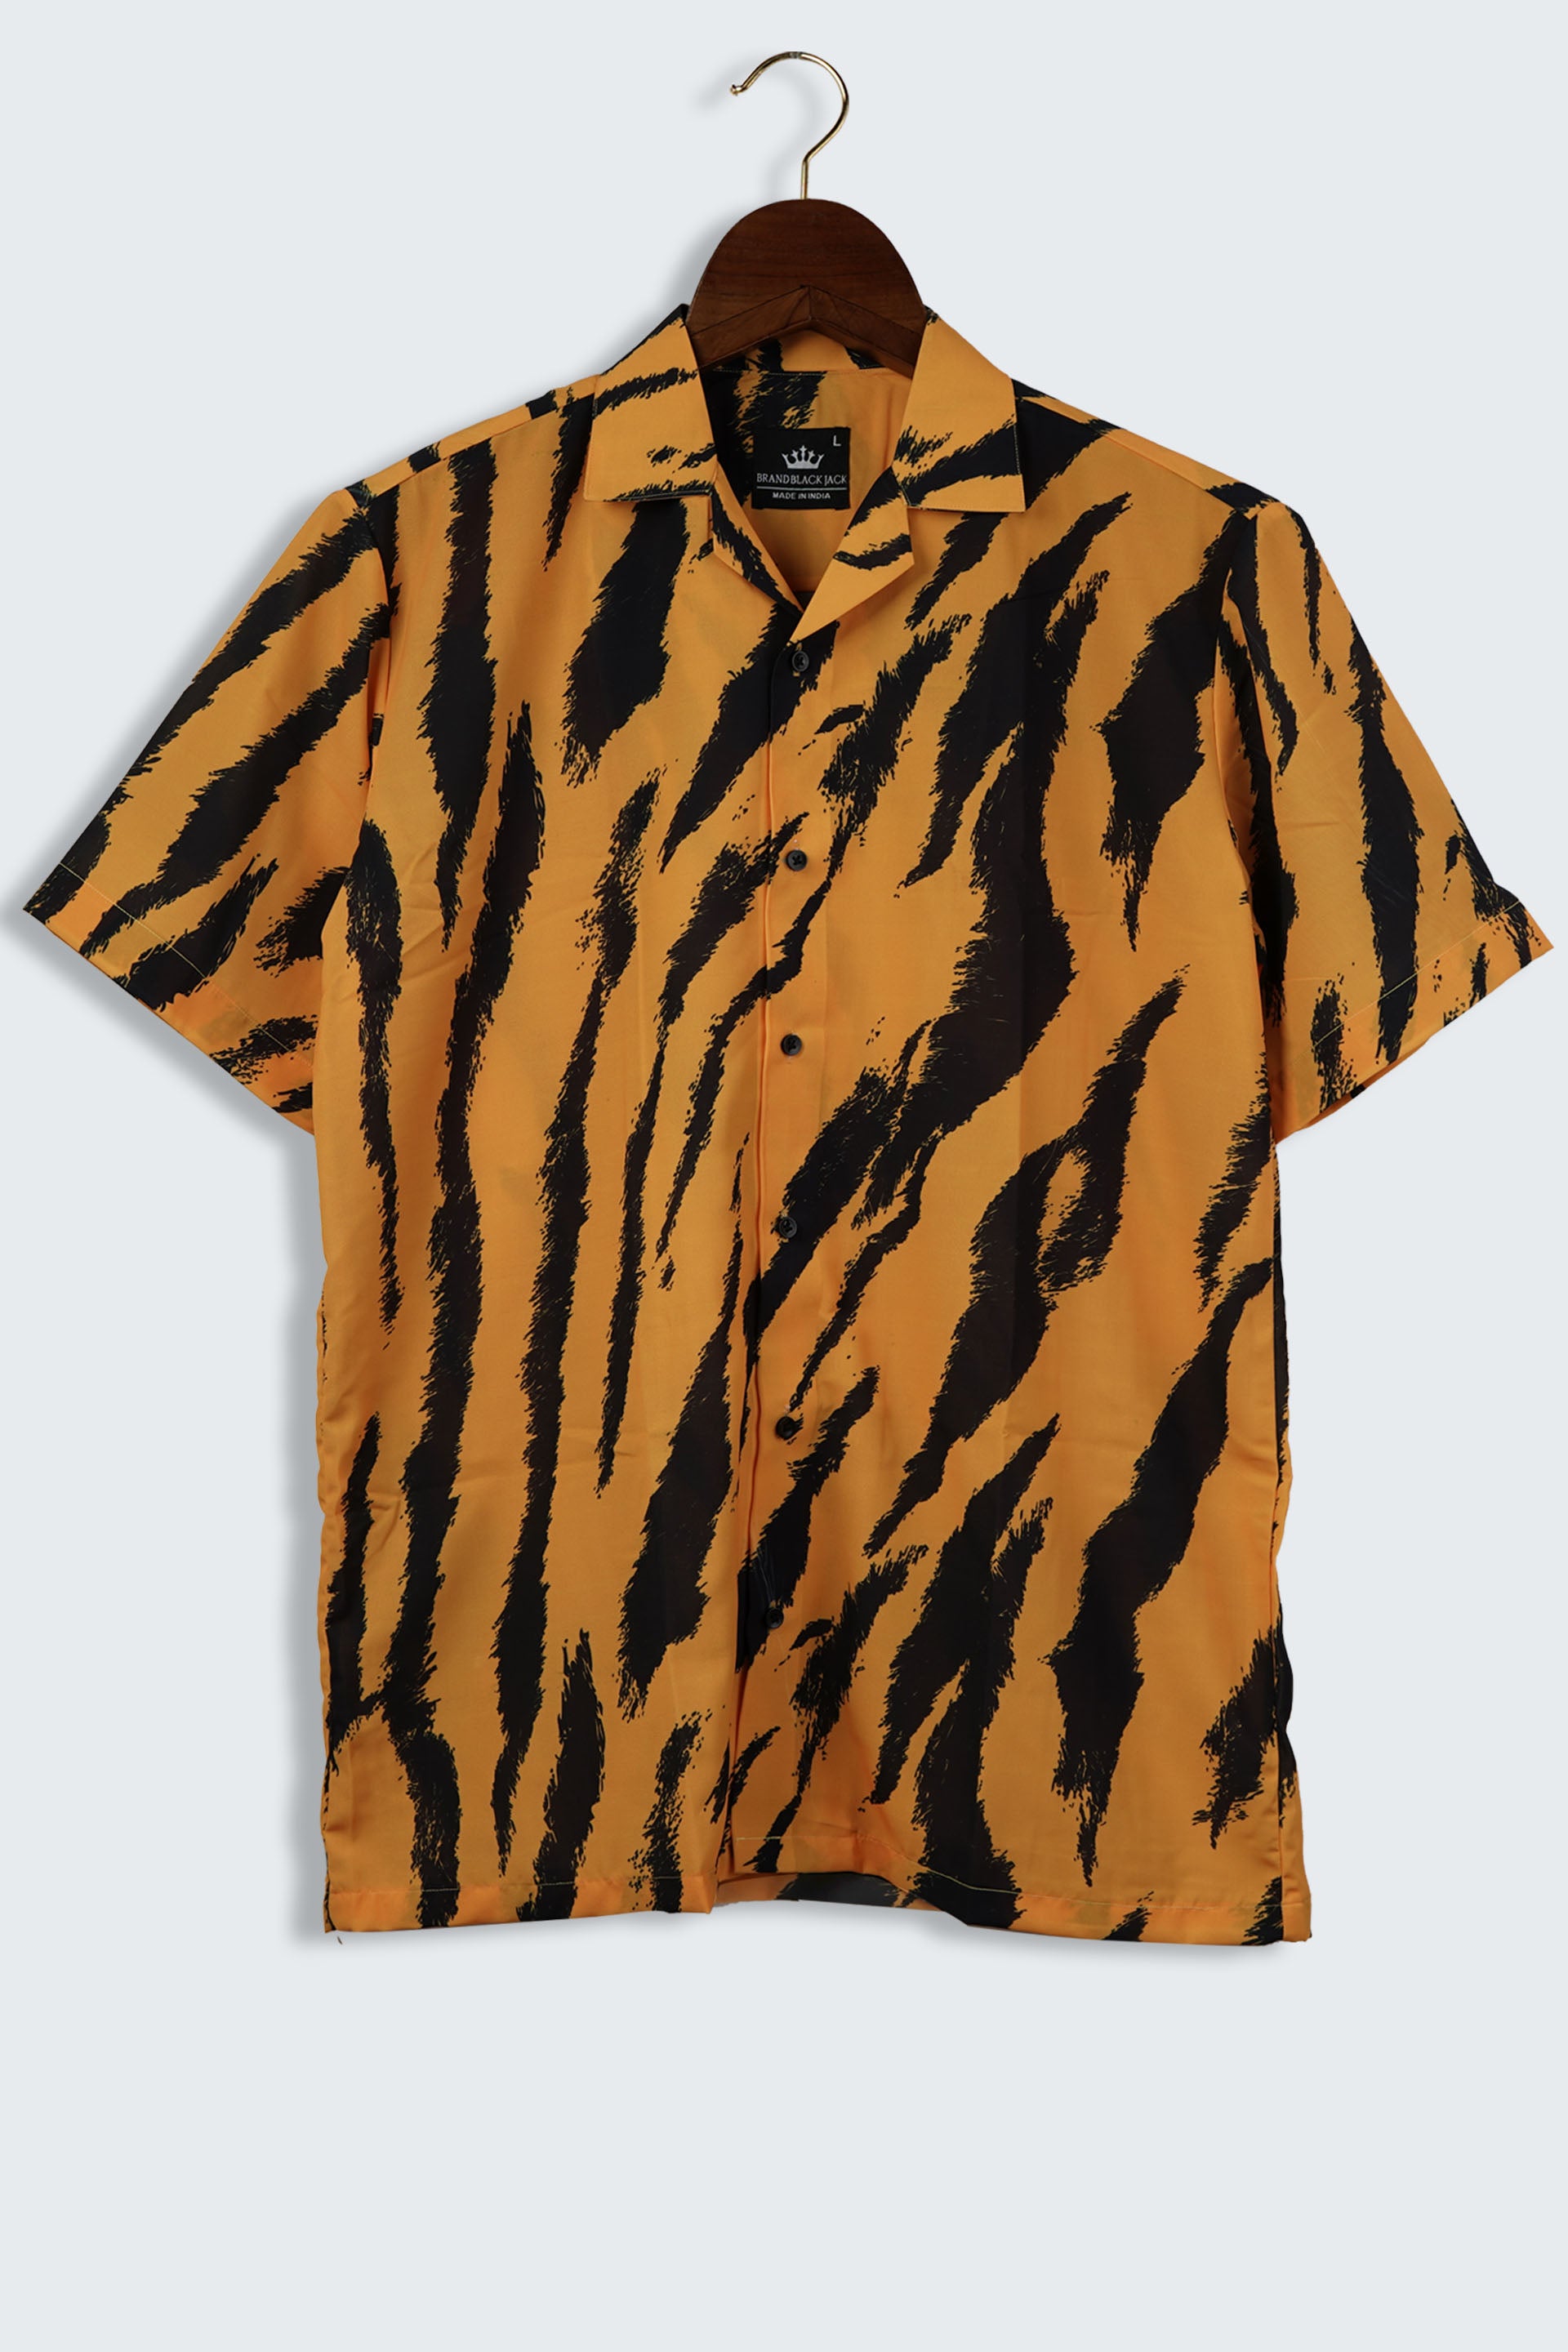 Tiger Yellow Stripe Black Jungle Safari Mens Printed Shirt , LARGE by Brand Black Jack